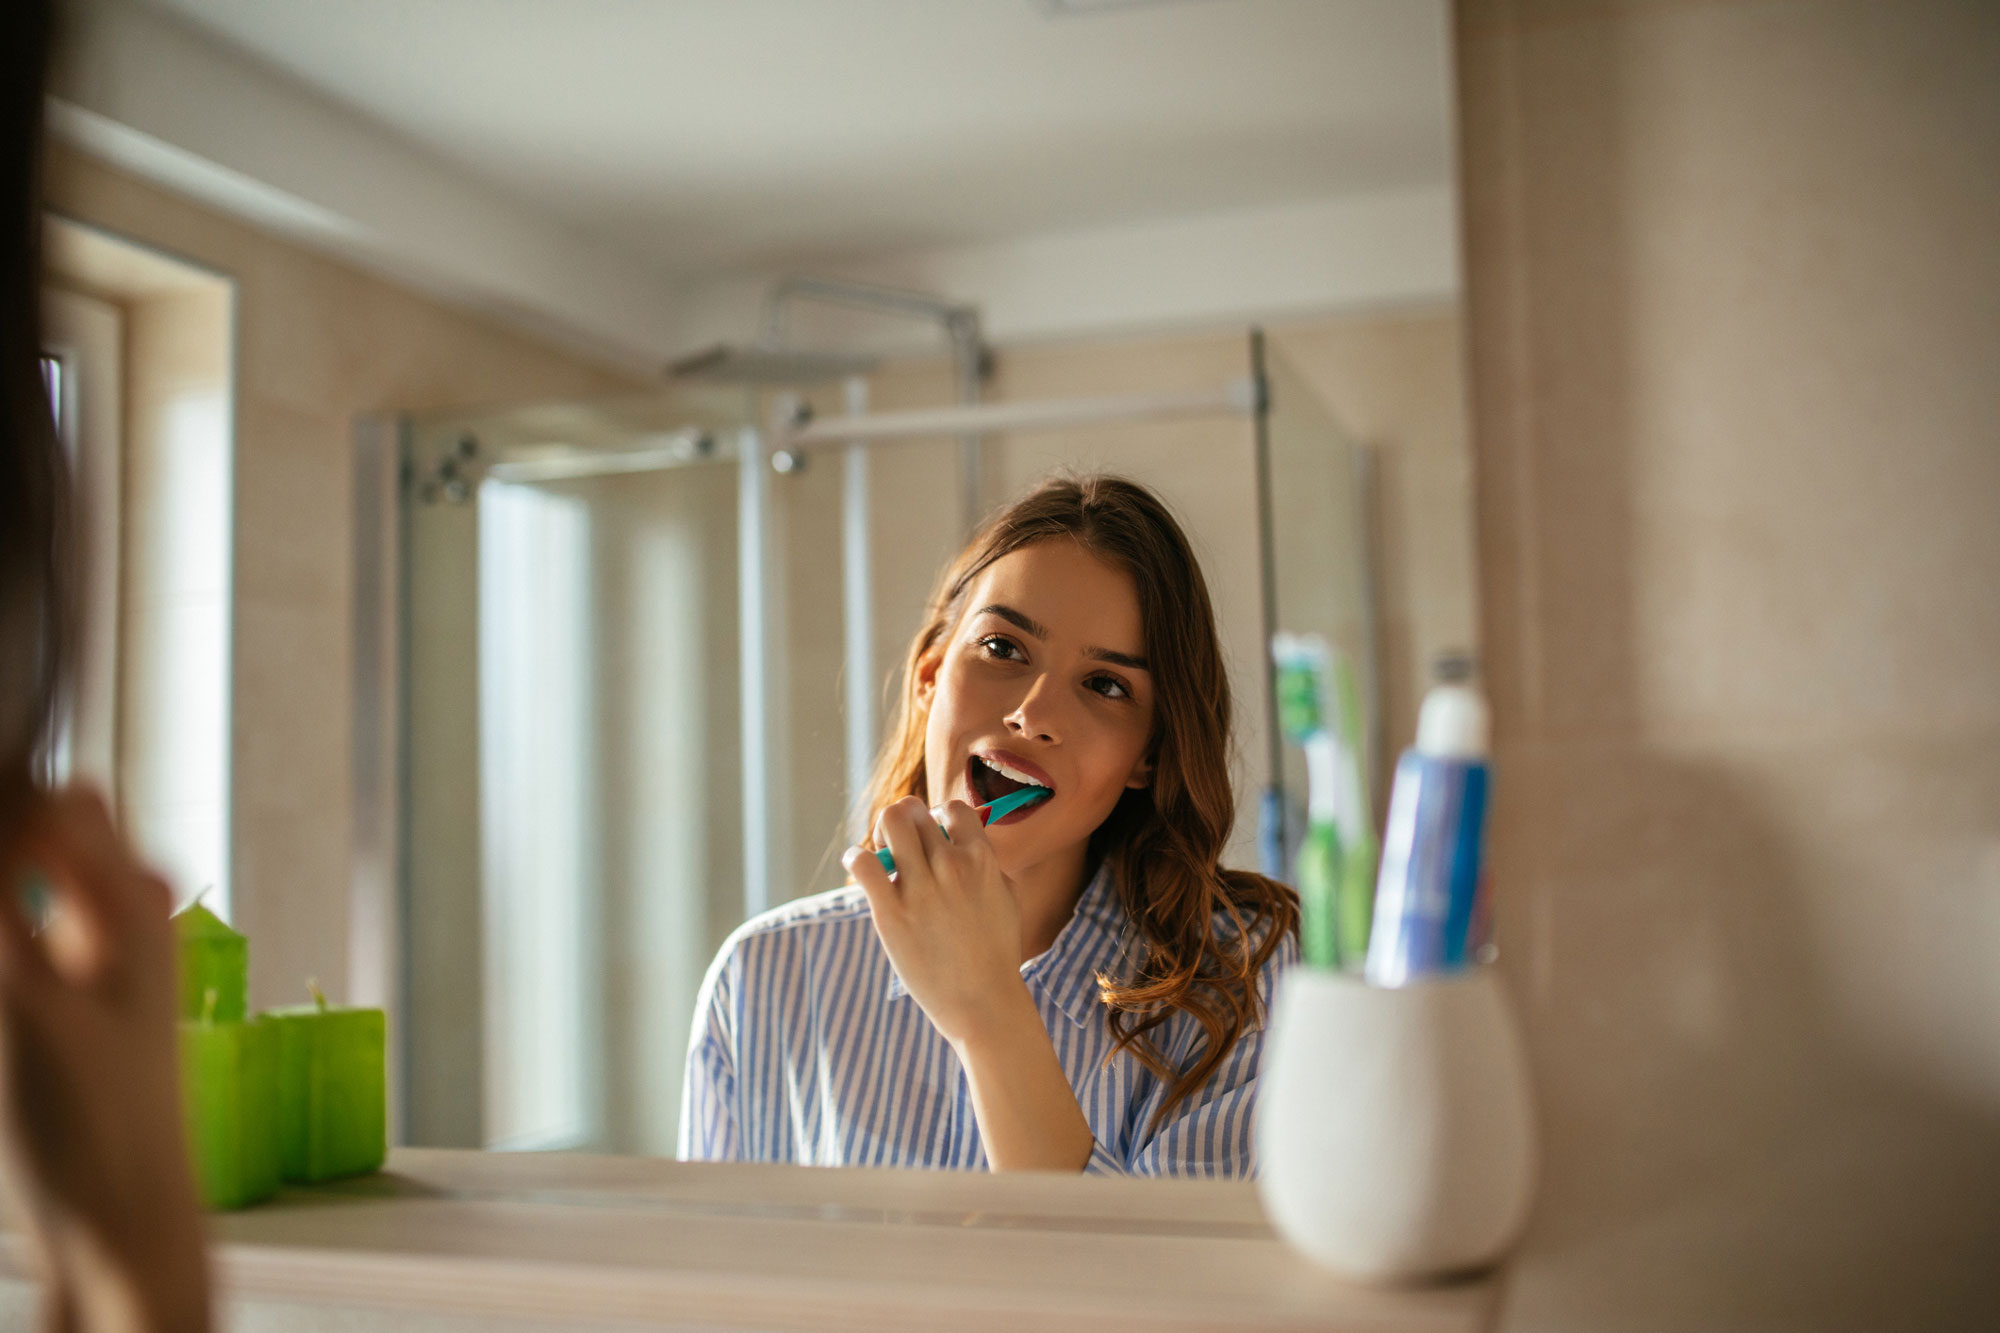 woman brushing teeth in the bathroom